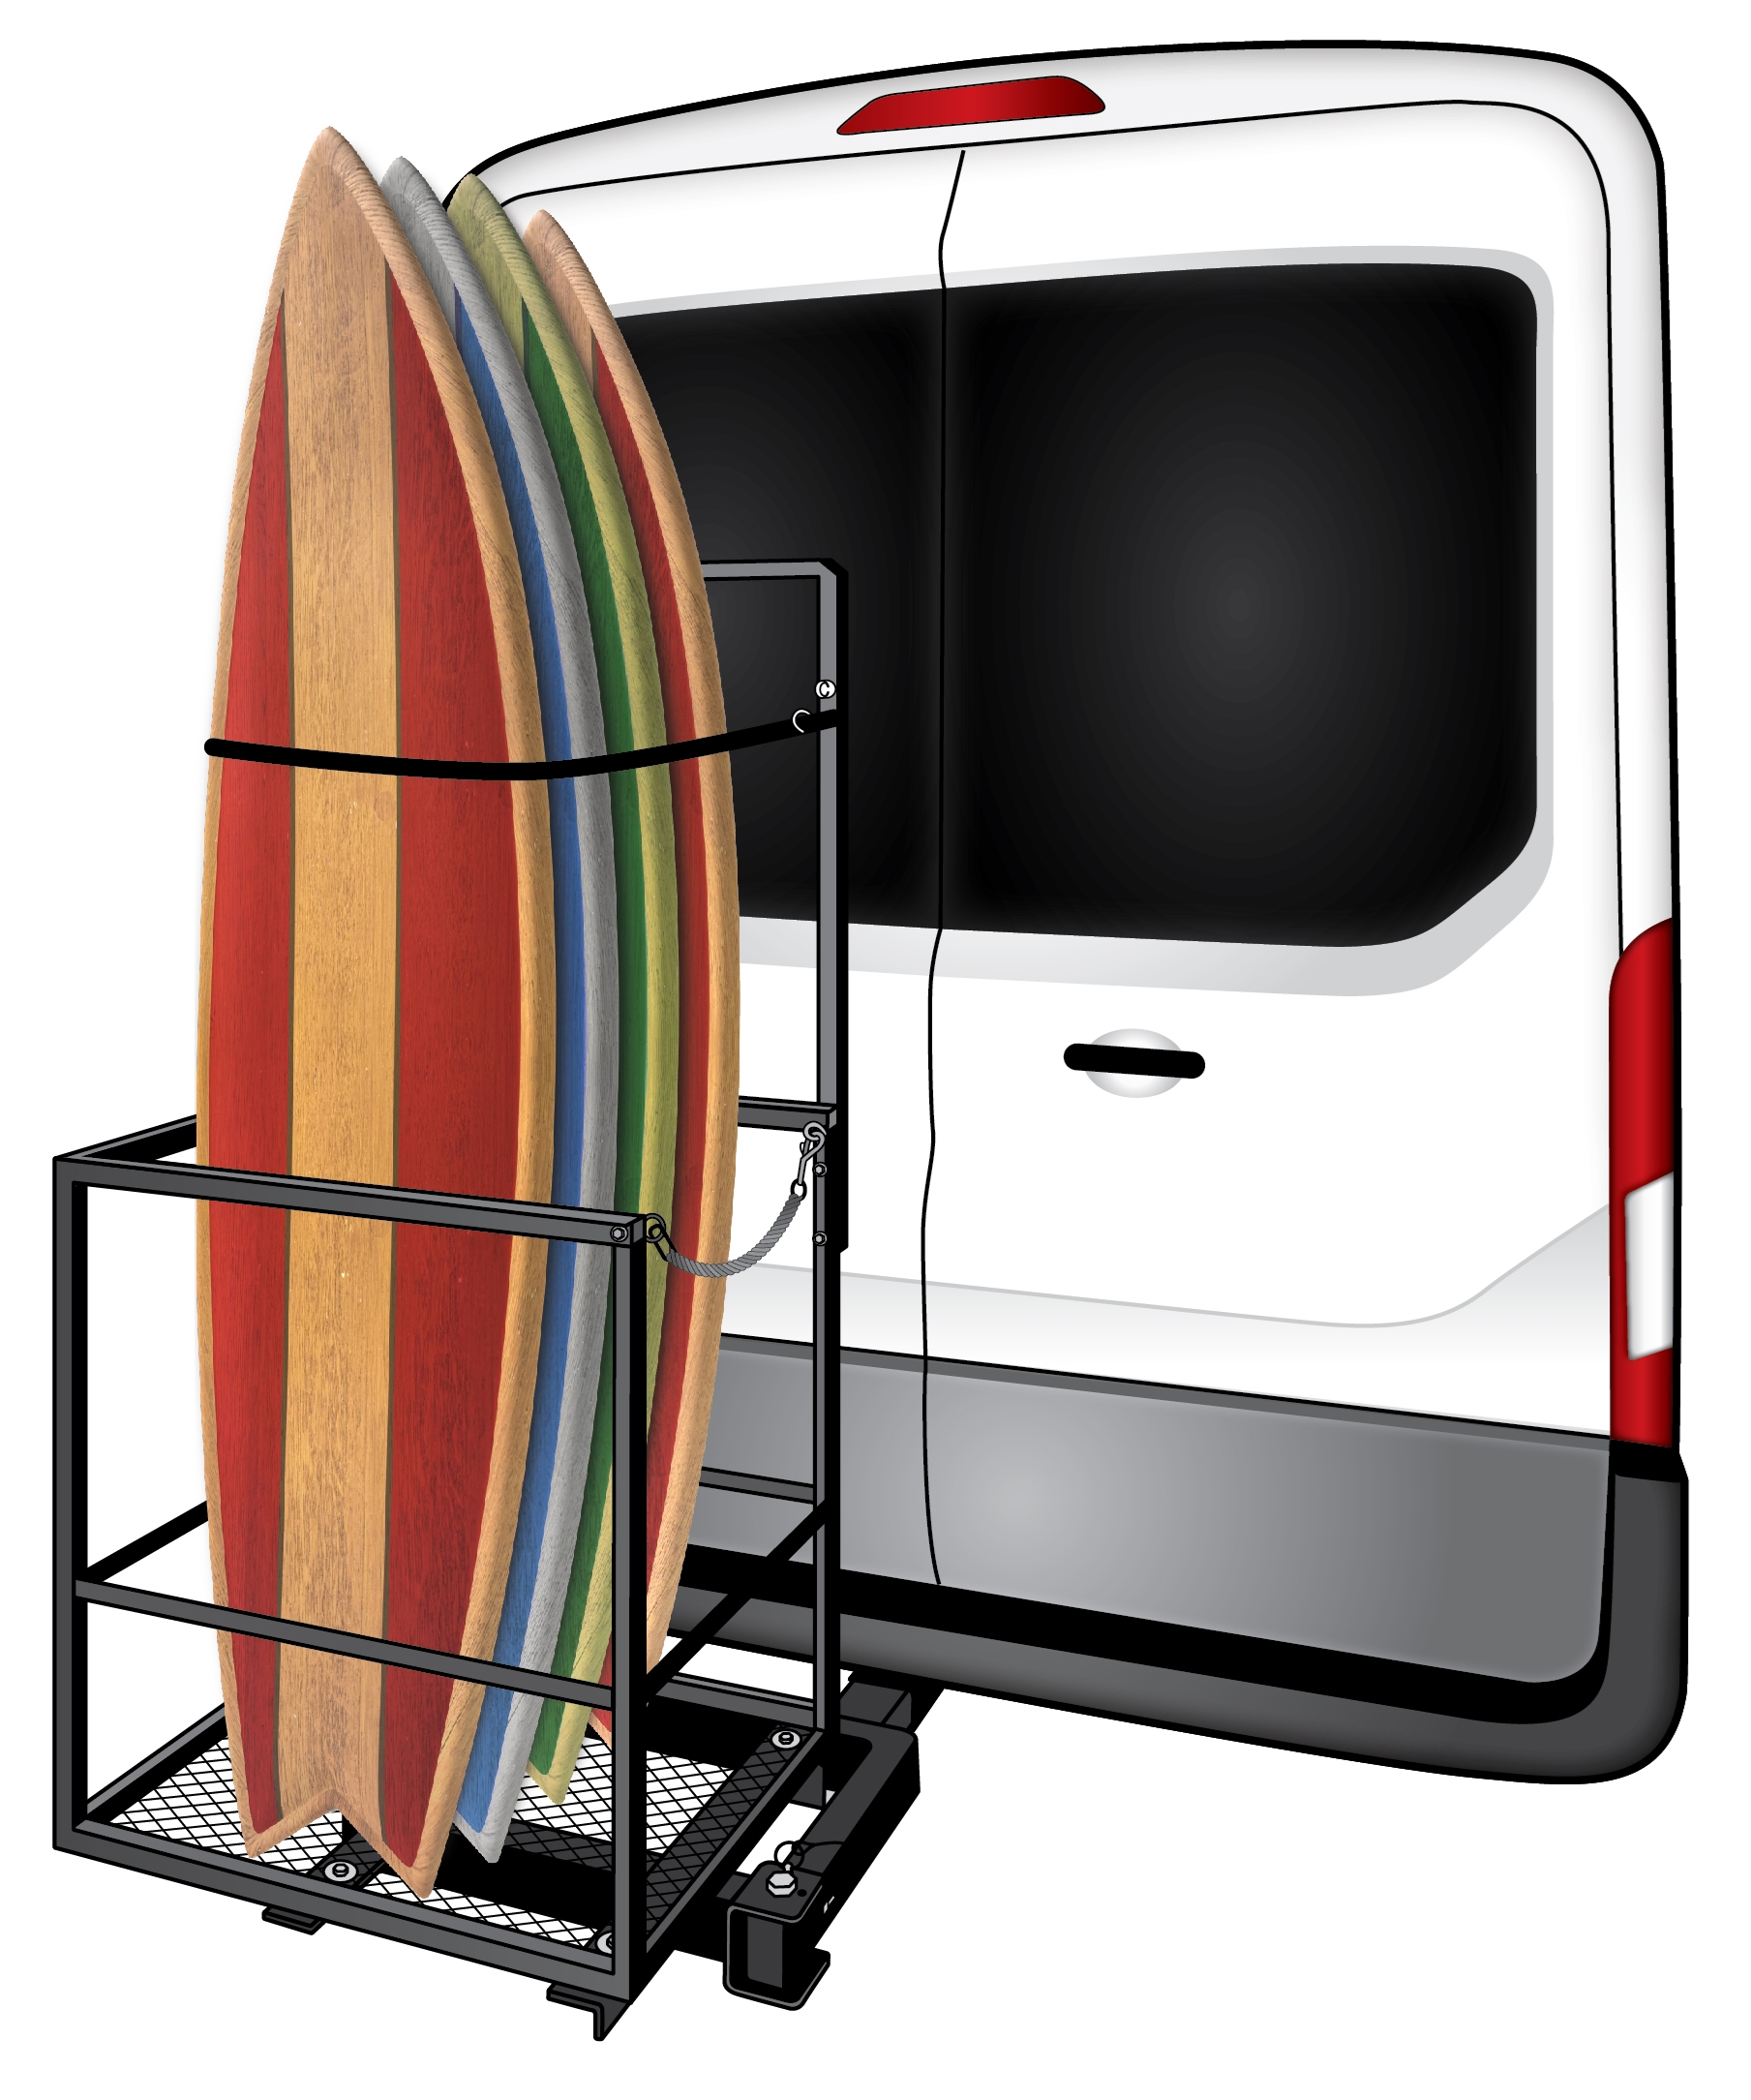 trailer hitch surfboard rack